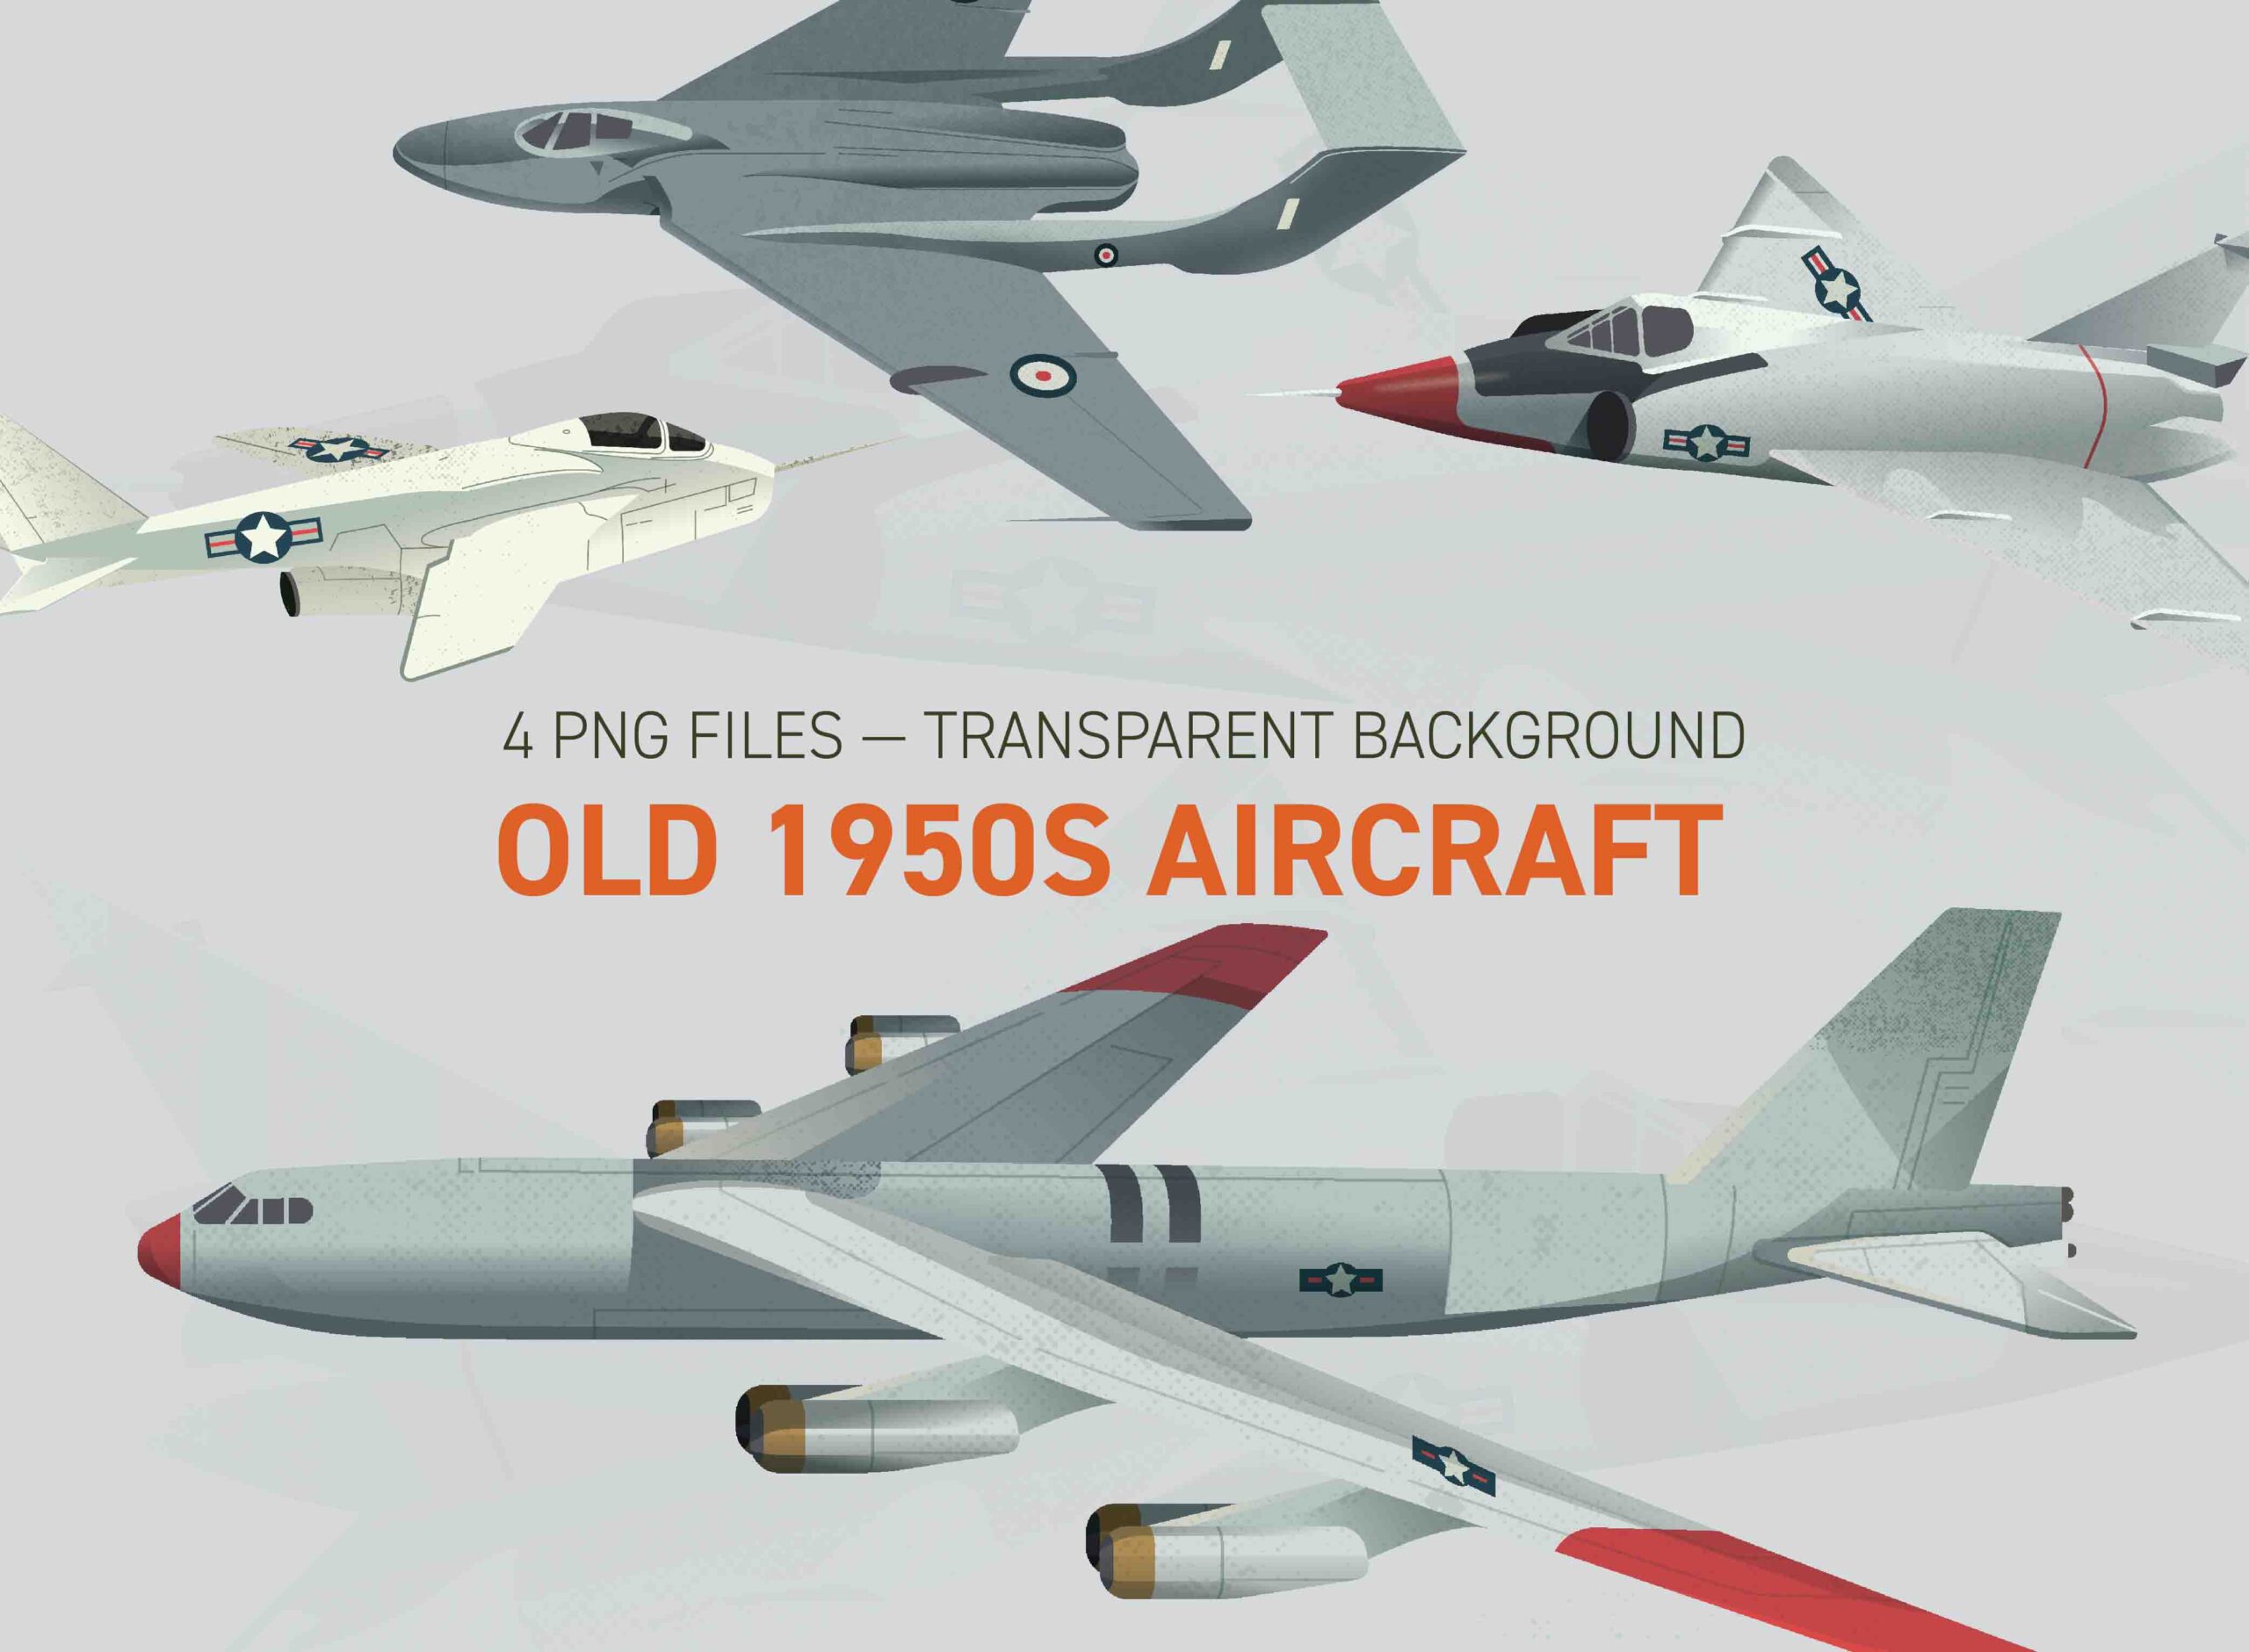 Aircraft-listing-lelinhtdigitals_old-1950s-aircraft-airplane-clip-arts-png-files